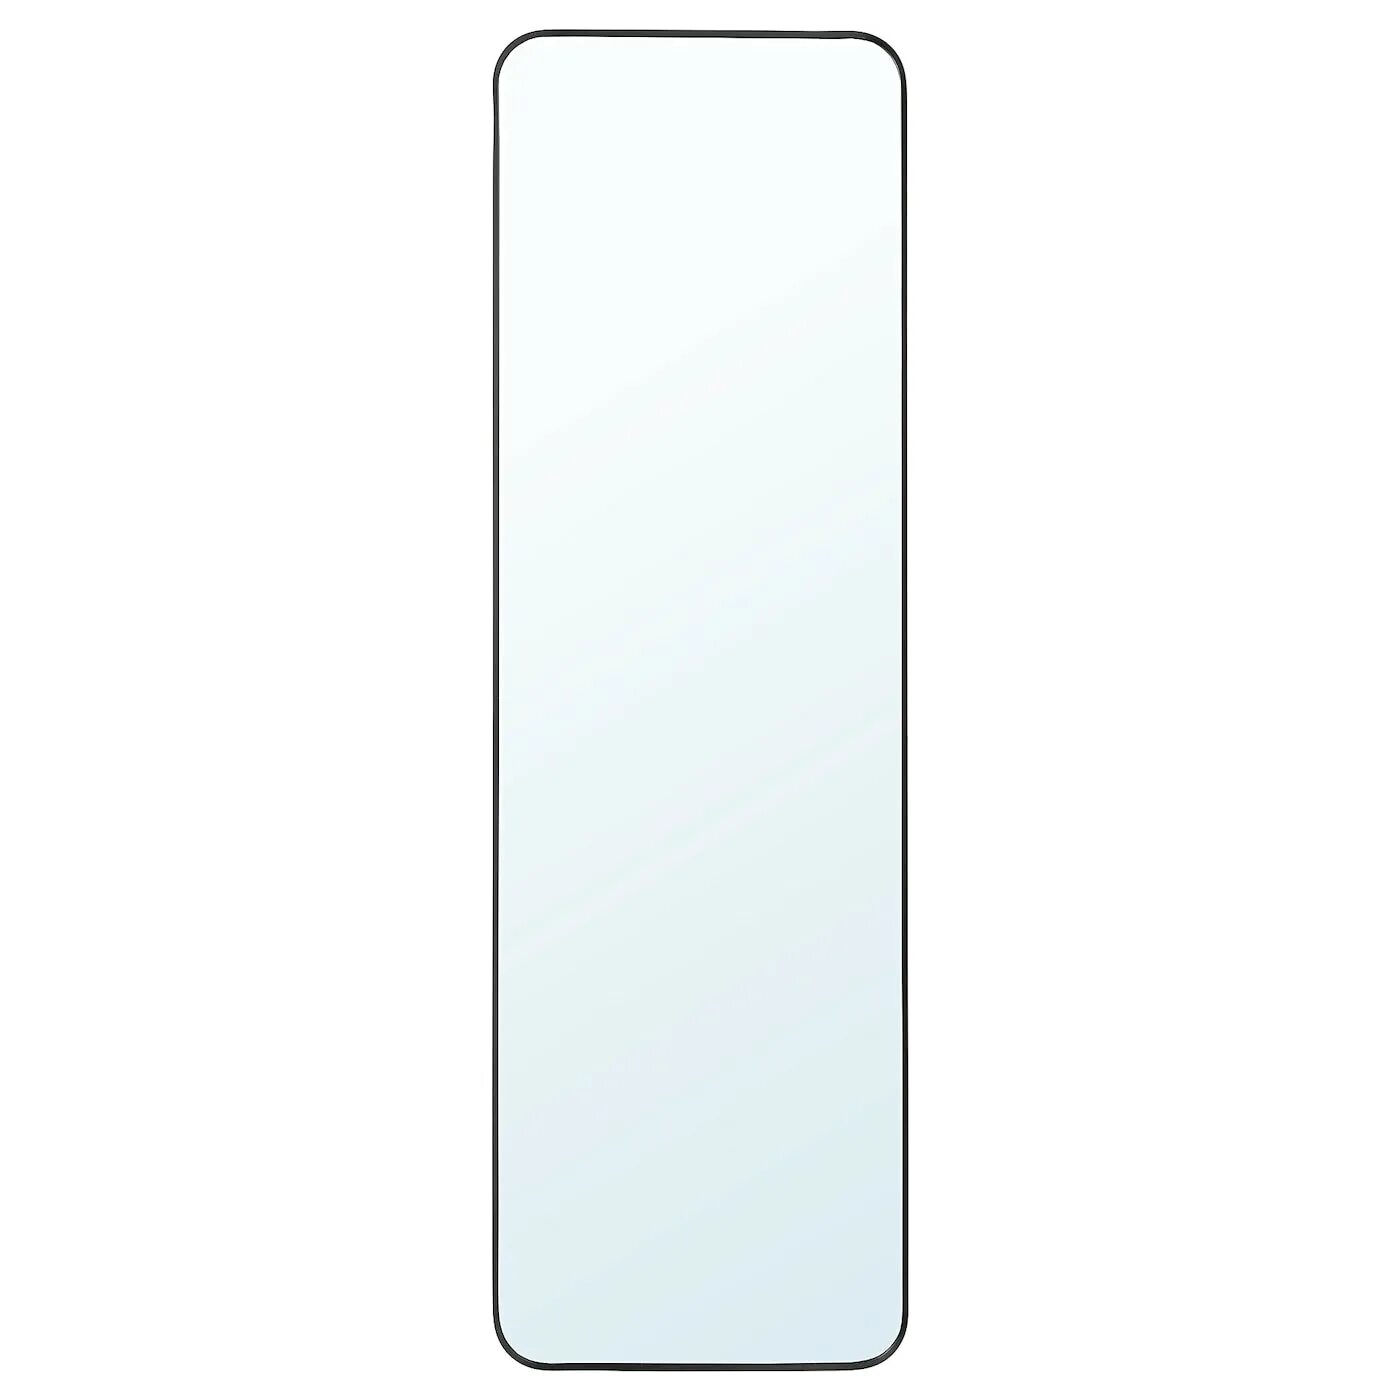 Темное зеркало отзывы. Lindbyn линдбюн зеркало, черный40x130 см. Линдбюн зеркало икеа. Линдбюн 40 130 зеркало. Икеа зеркало Lindbyn линдбюн.